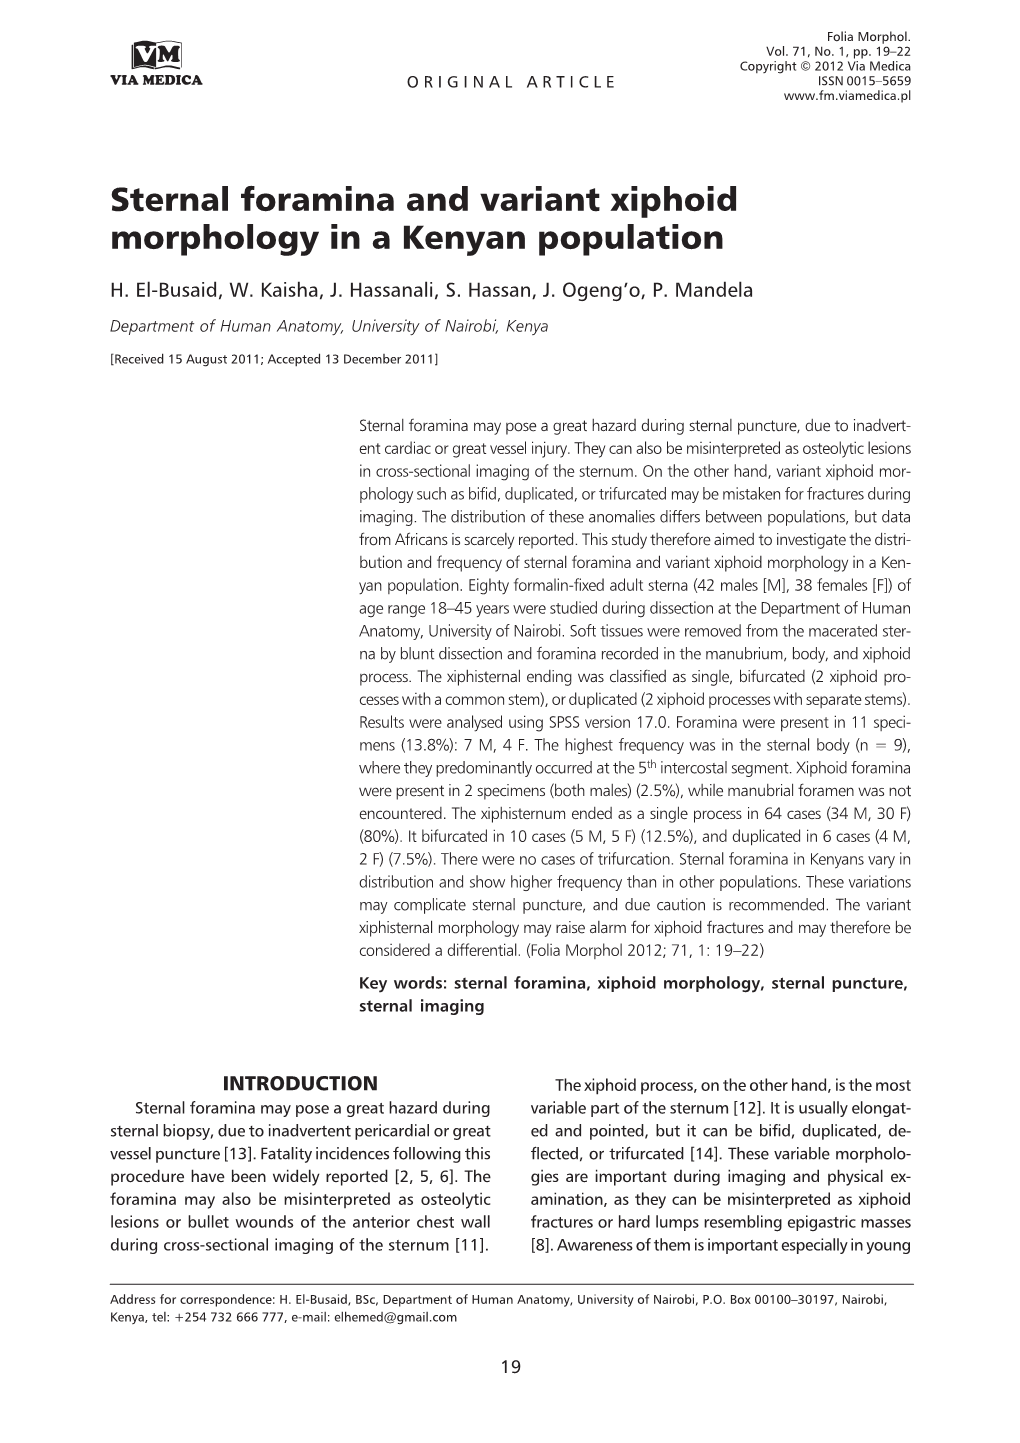 Sternal Foramina and Variant Xiphoid Morphology in a Kenyan Population